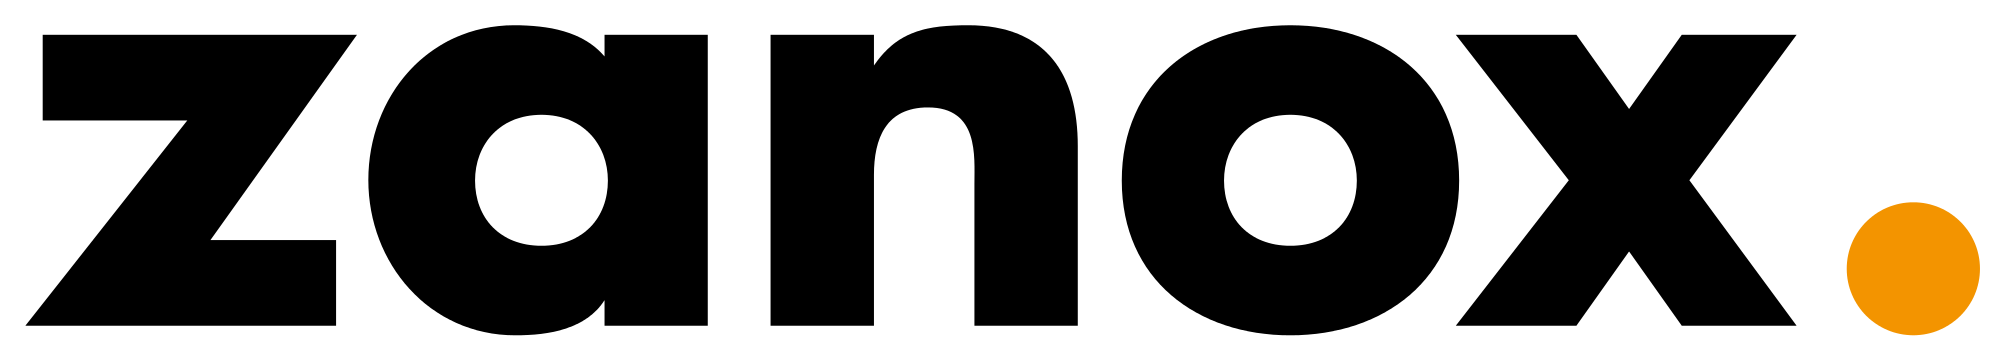 Zanox-Logo.svg.png